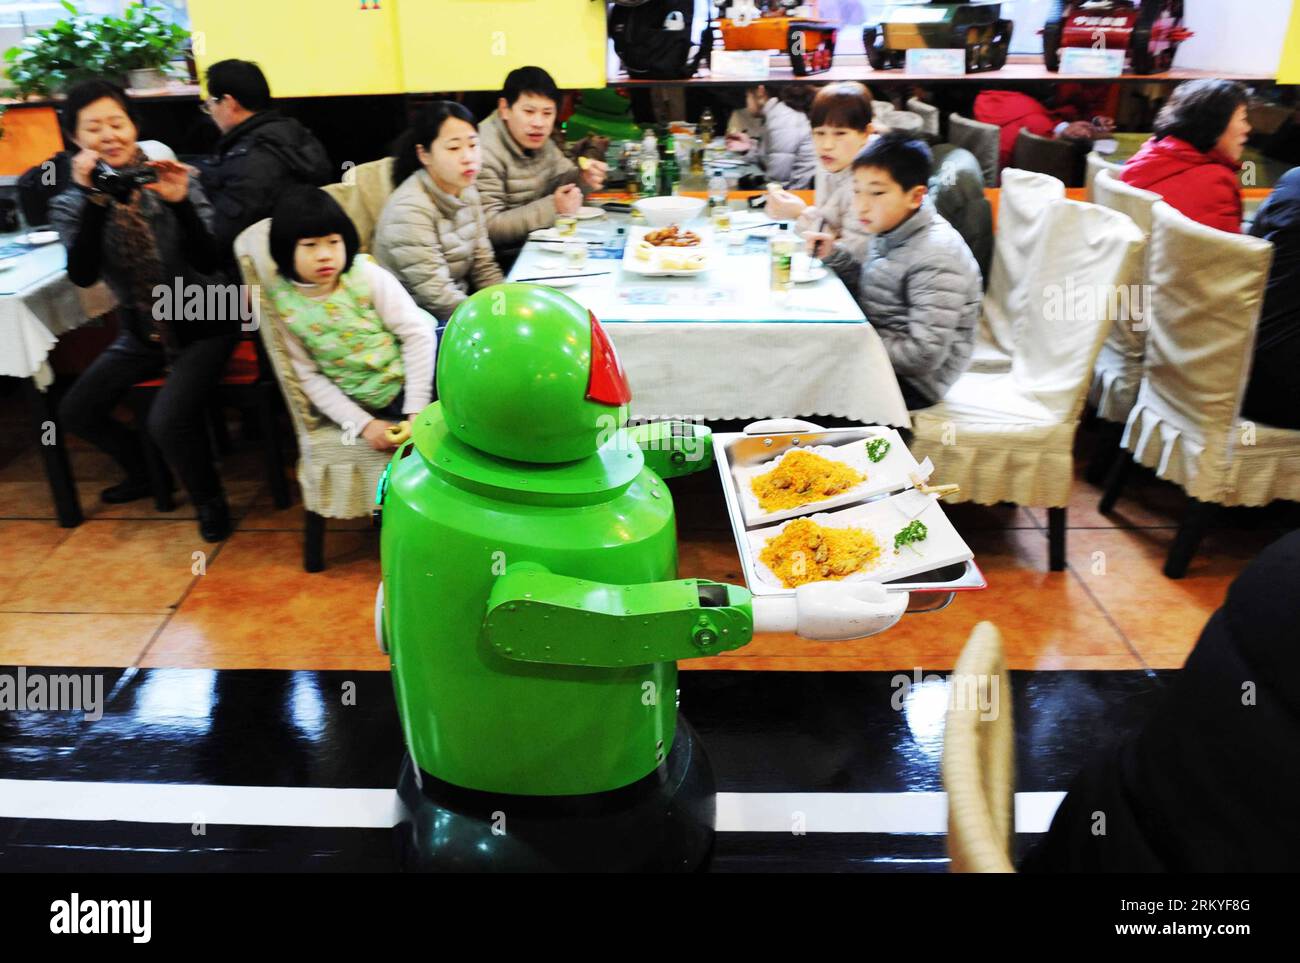 Bildnummer: 59214296  Datum: 13.02.2013  Copyright: imago/Xinhua (130213) -- HARBIN, Feb. 13, 2013 (Xinhua) -- A robot waiter brings dishes of food to consumers in a restaurant in Harbin, capital of northeast China s Heilongjiang Province, Feb. 13, 2013. The restaurant, offering service by 20 robots, started operating on Wednesday, attracting many consumers. (Xinhua/Wang Jianwei) (hdt) CHINA-HARBIN-RESTAURANT-ROBOT (CN) PUBLICATIONxNOTxINxCHN Gesellschaft Gastronomie Erlebnisgastronomie kurio Komik Roboter Kellner Fotostory premiumd x0x xac 2013 quer      59214296 Date 13 02 2013 Copyright Ima Stock Photo